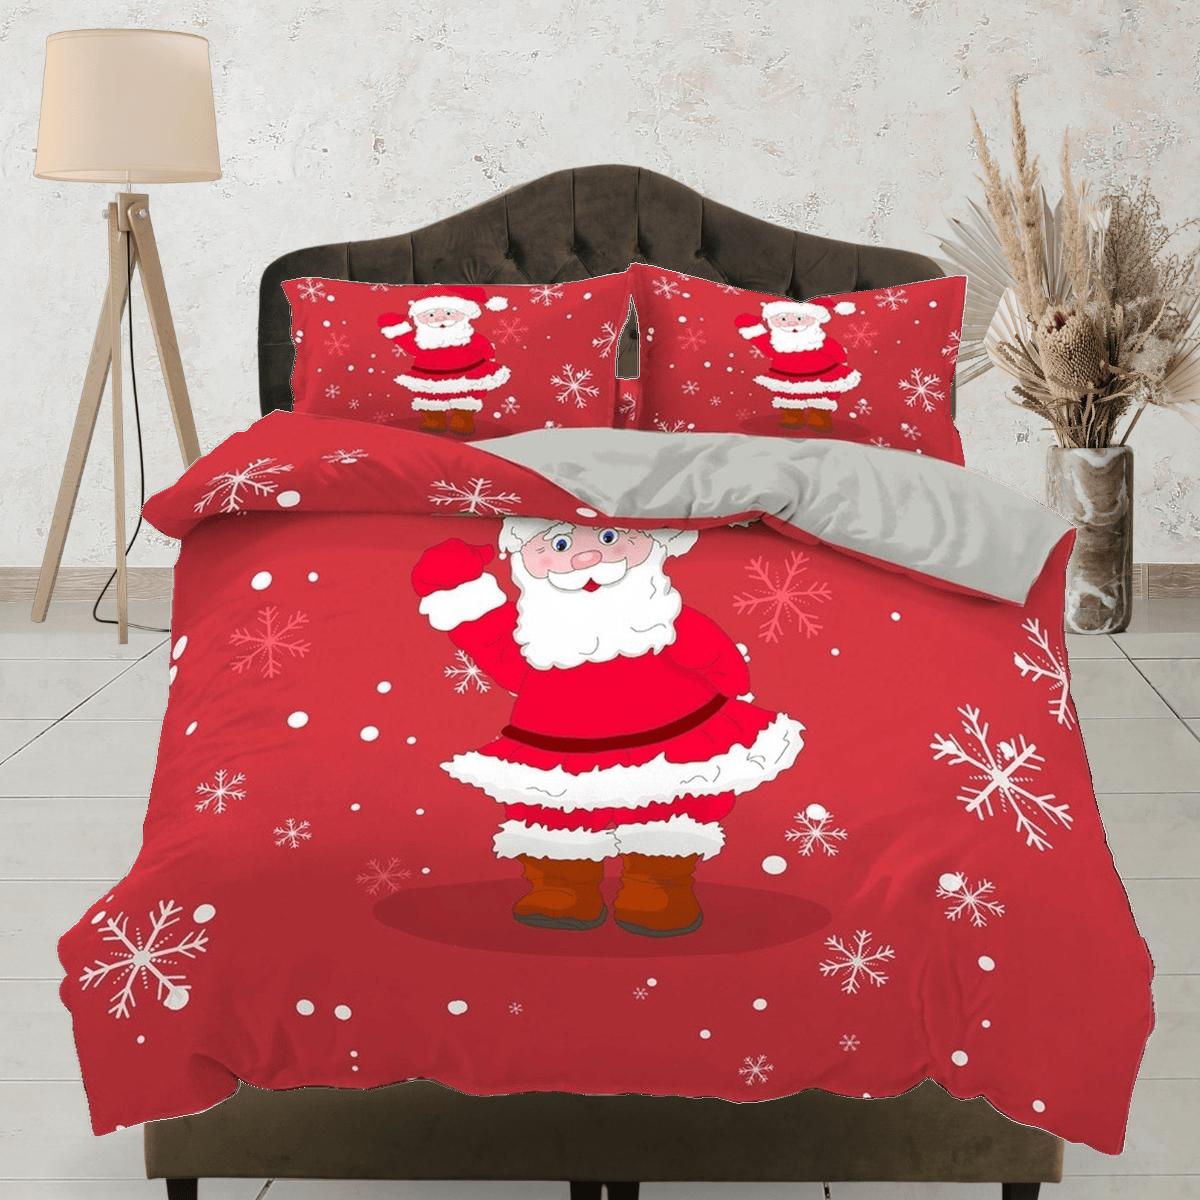 daintyduvet Cute Santa Claus Christmas bedding & pillowcase holiday gift red duvet cover king queen twin toddler bedding baby Christmas farmhouse decor